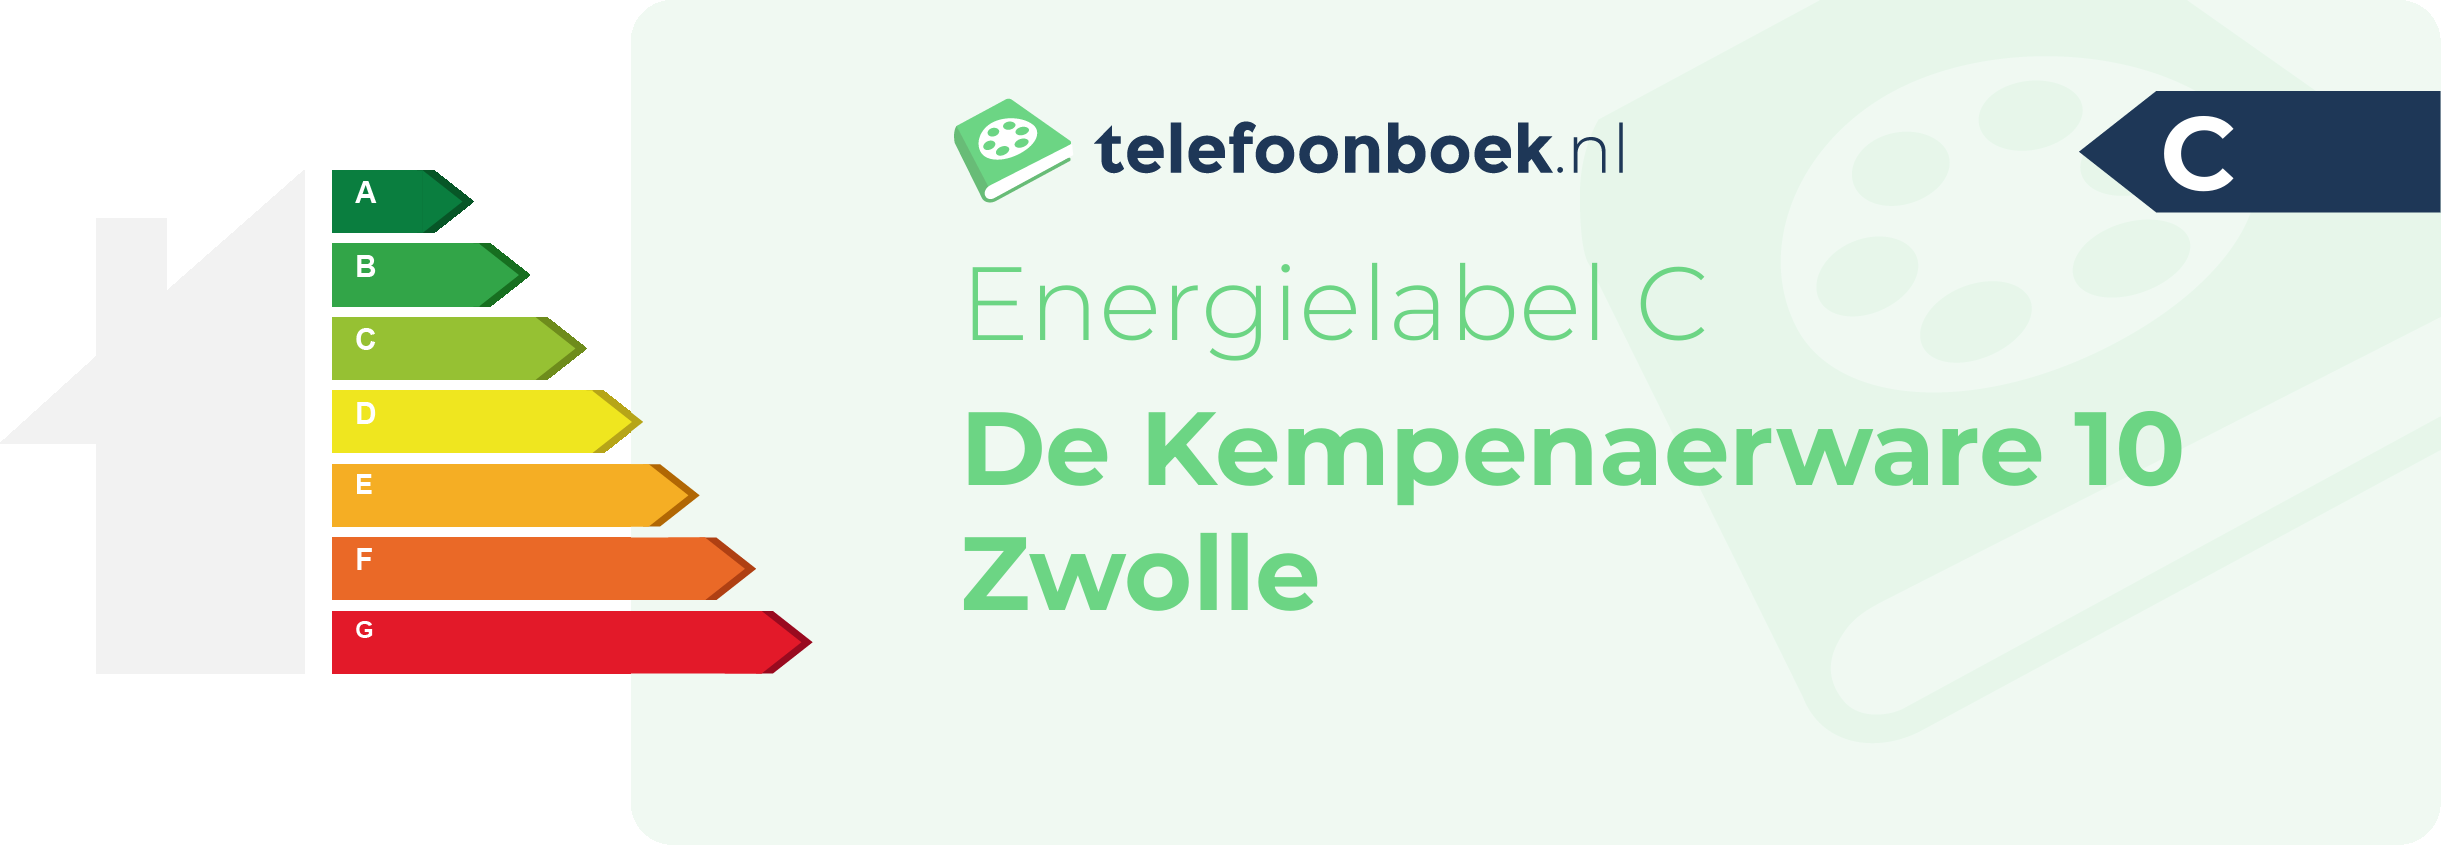 Energielabel De Kempenaerware 10 Zwolle